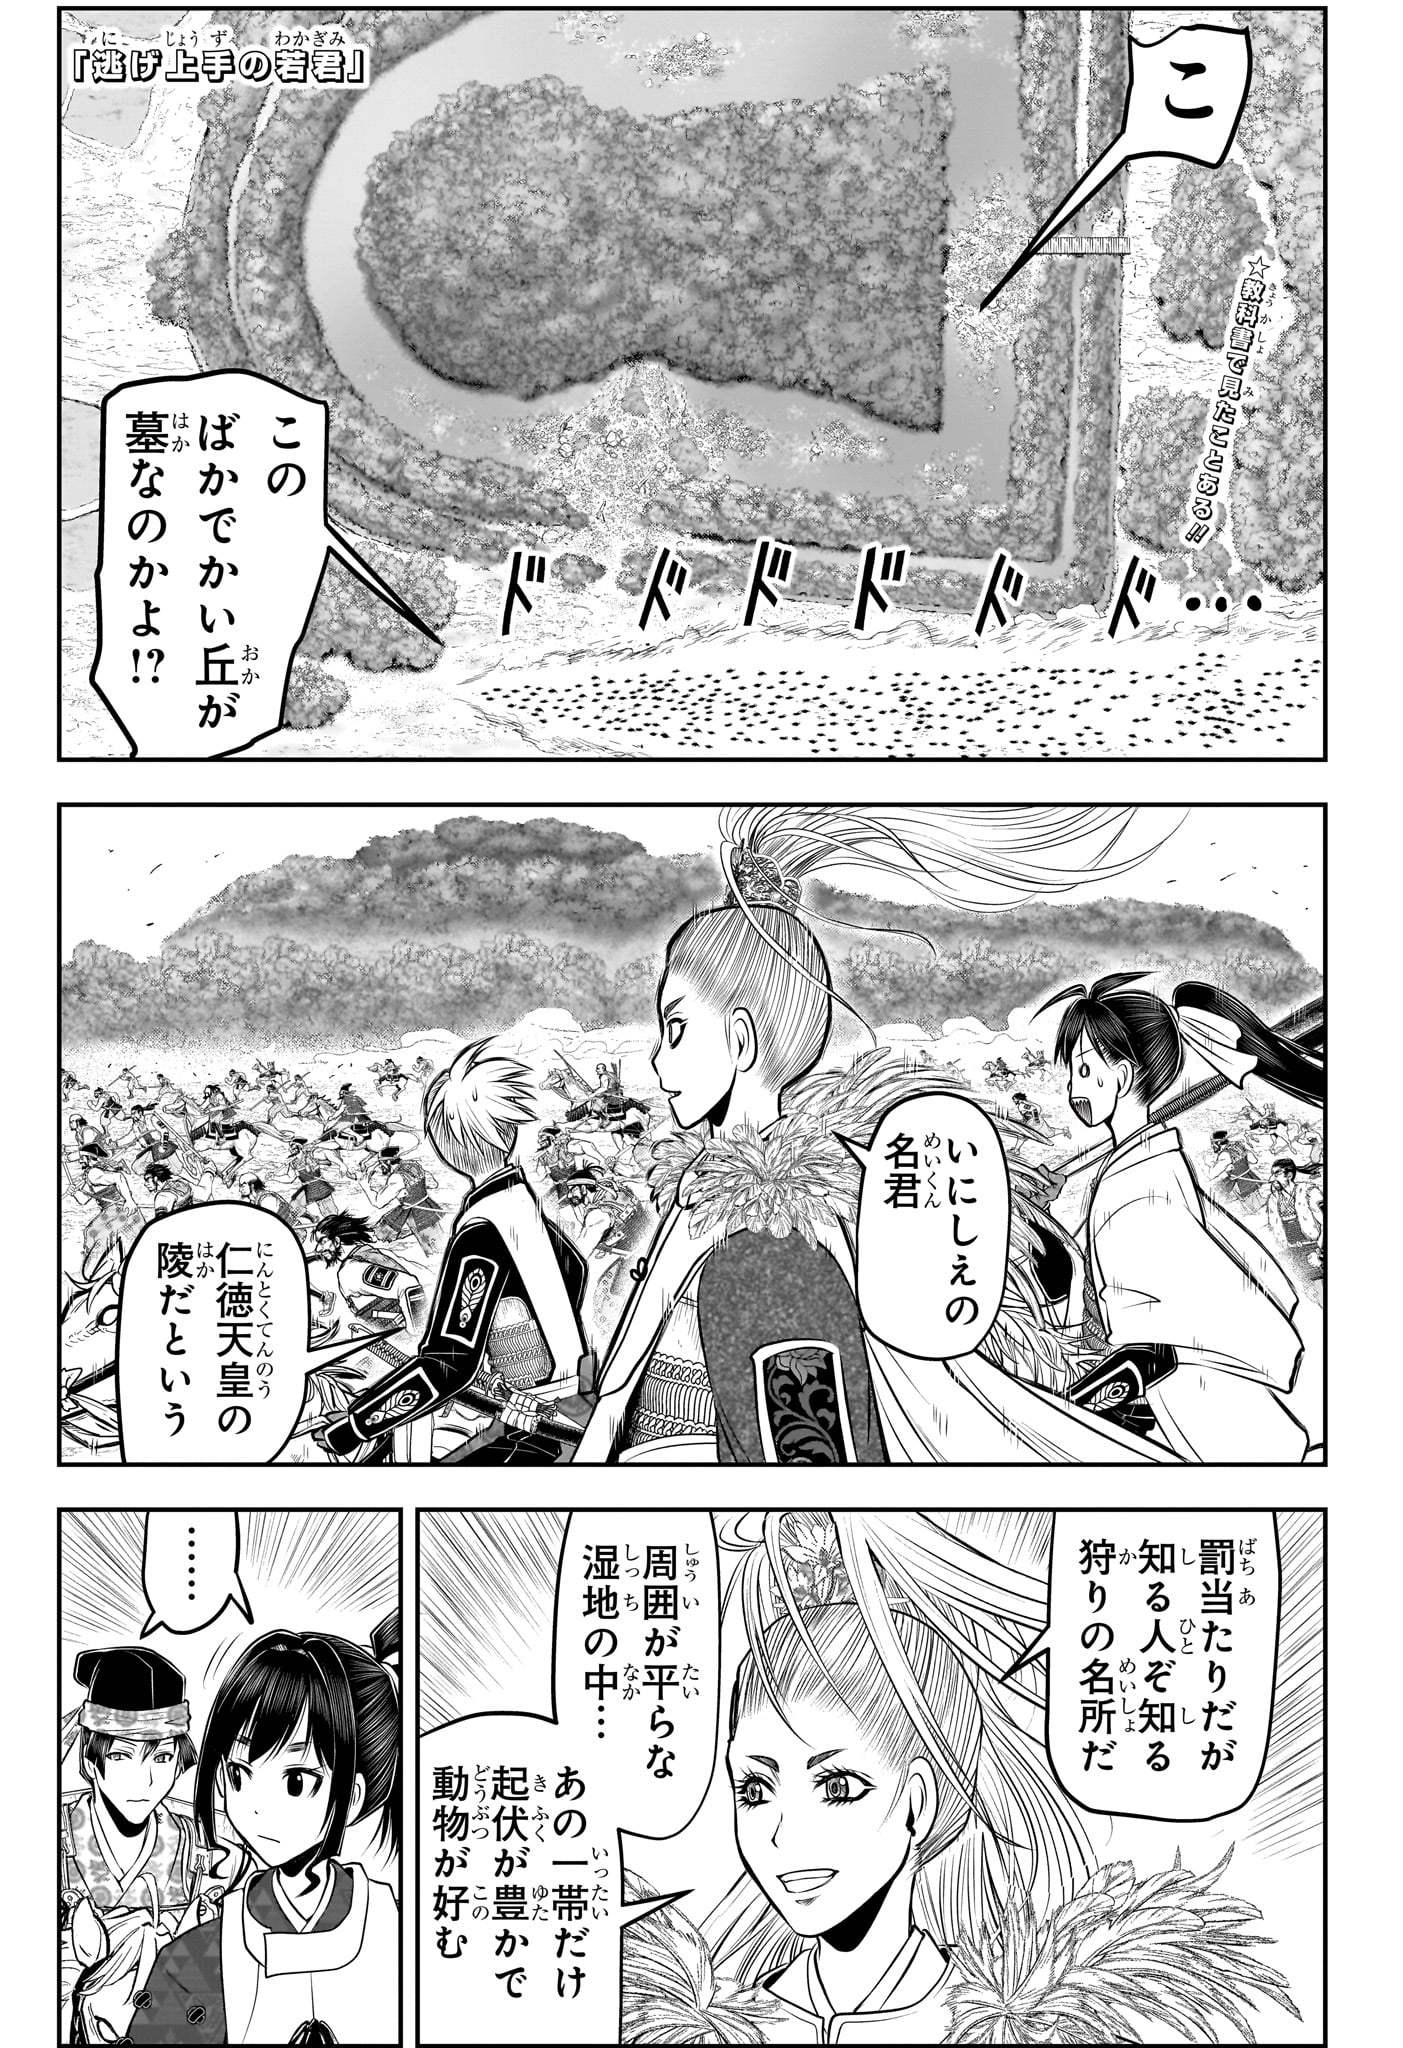 Nige Jouzu no Wakagimi - Chapter 156 - Page 1